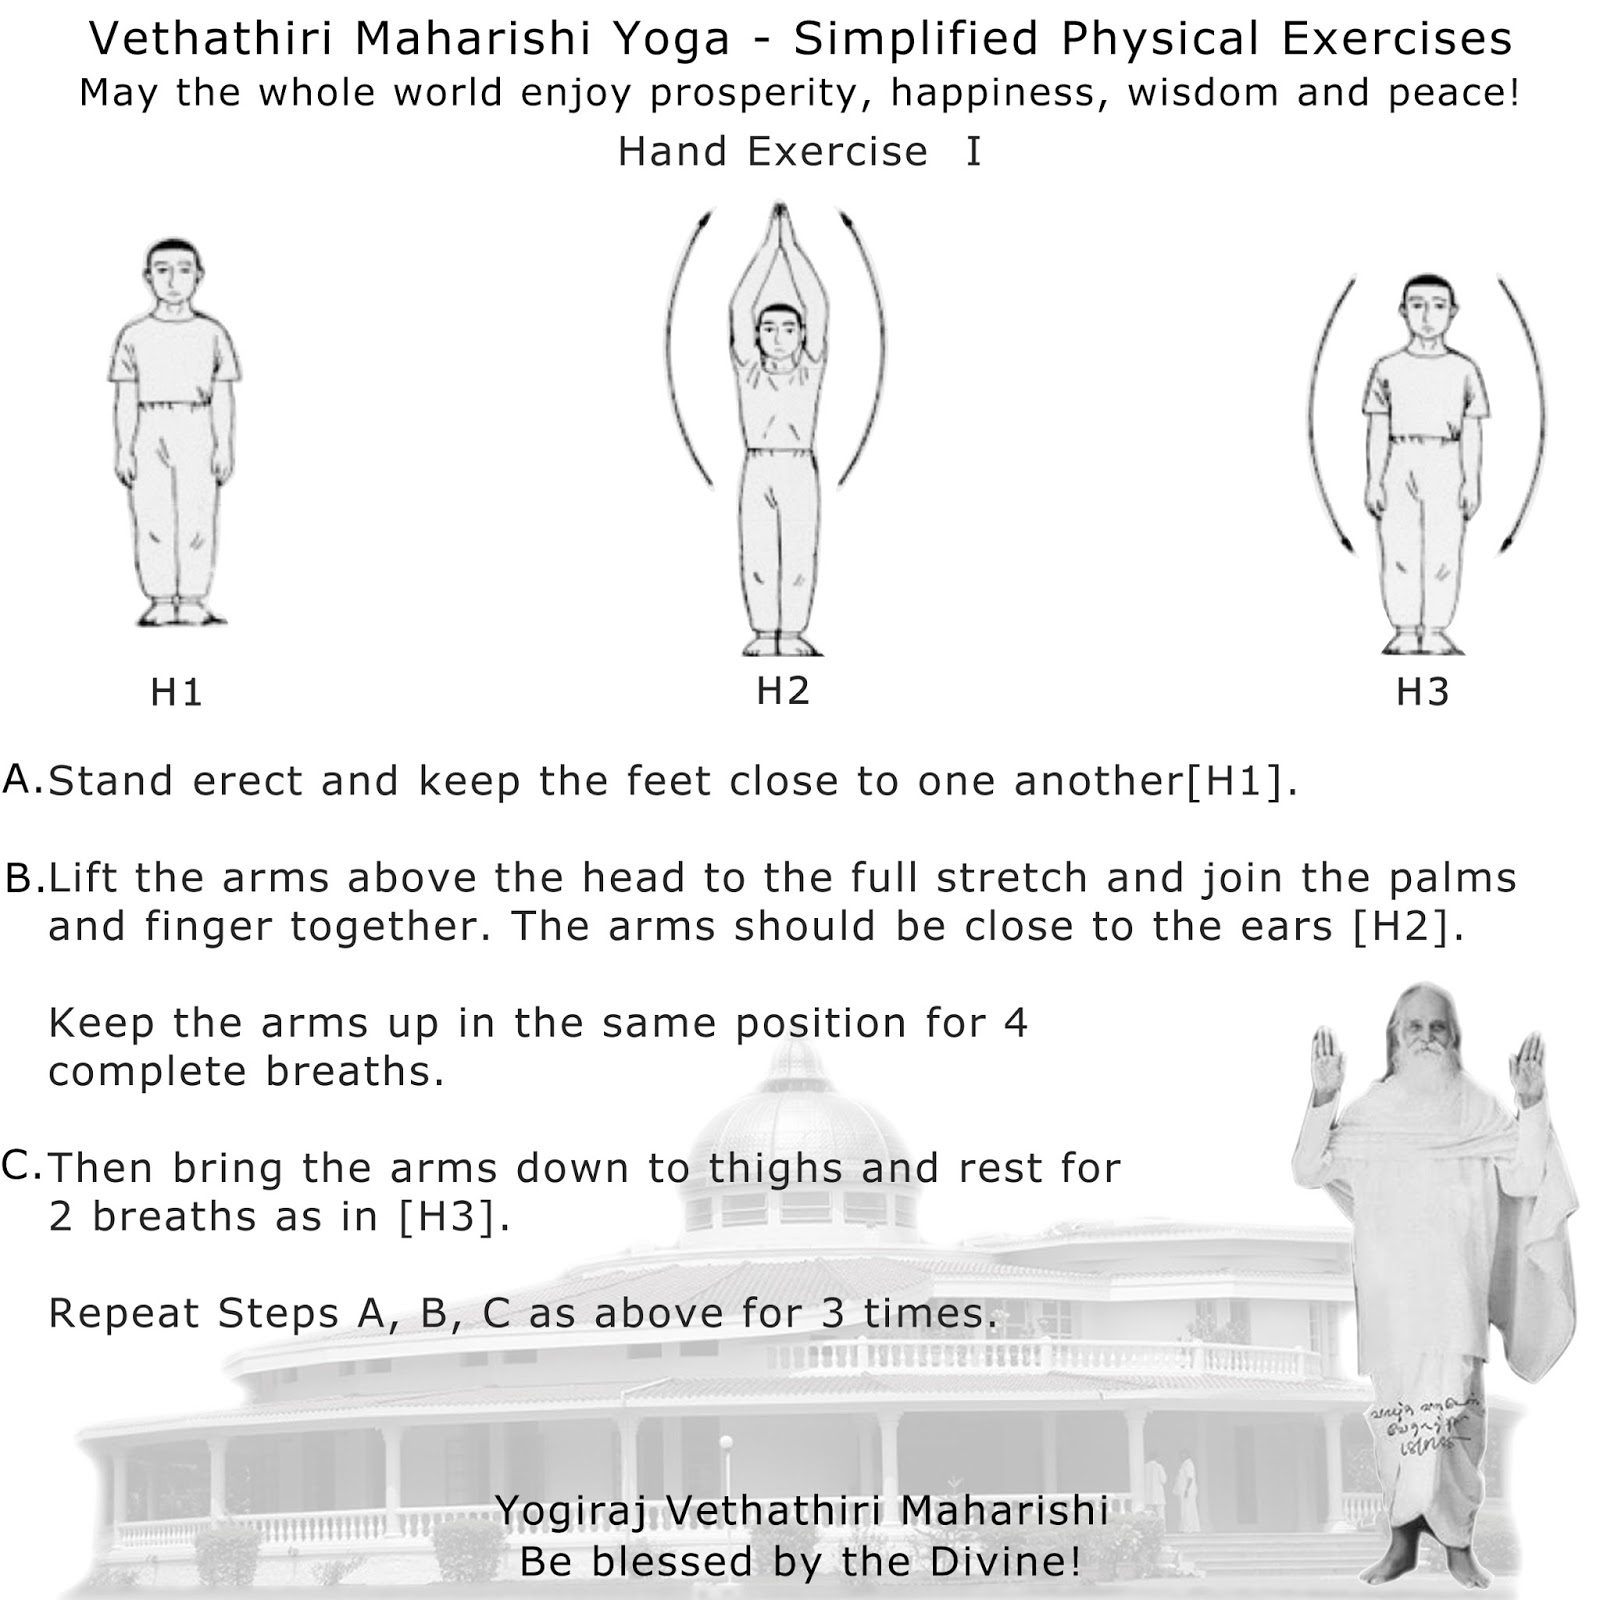 Vethathiri Maharishi Exercise Book Pdf - downefile